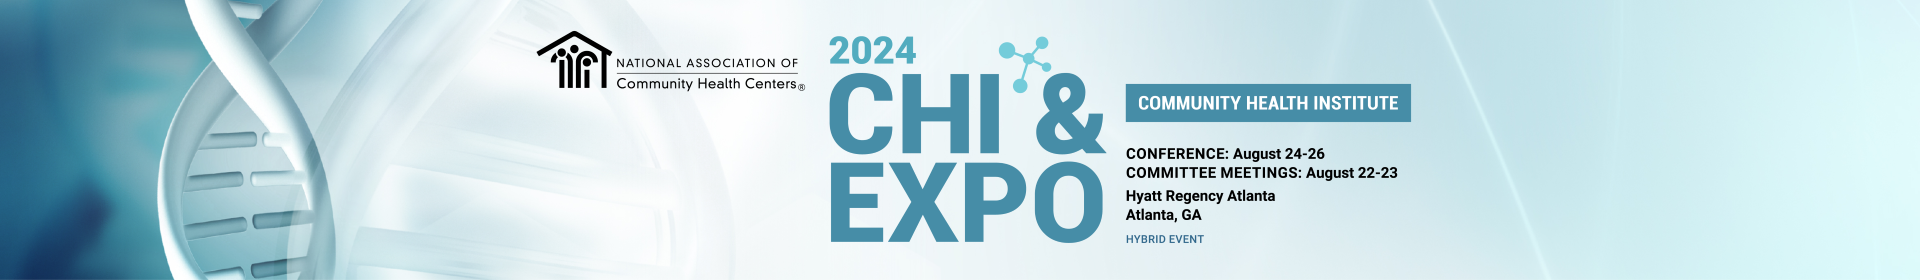 2024 Community Health Institute (CHI) & EXPO Event Banner